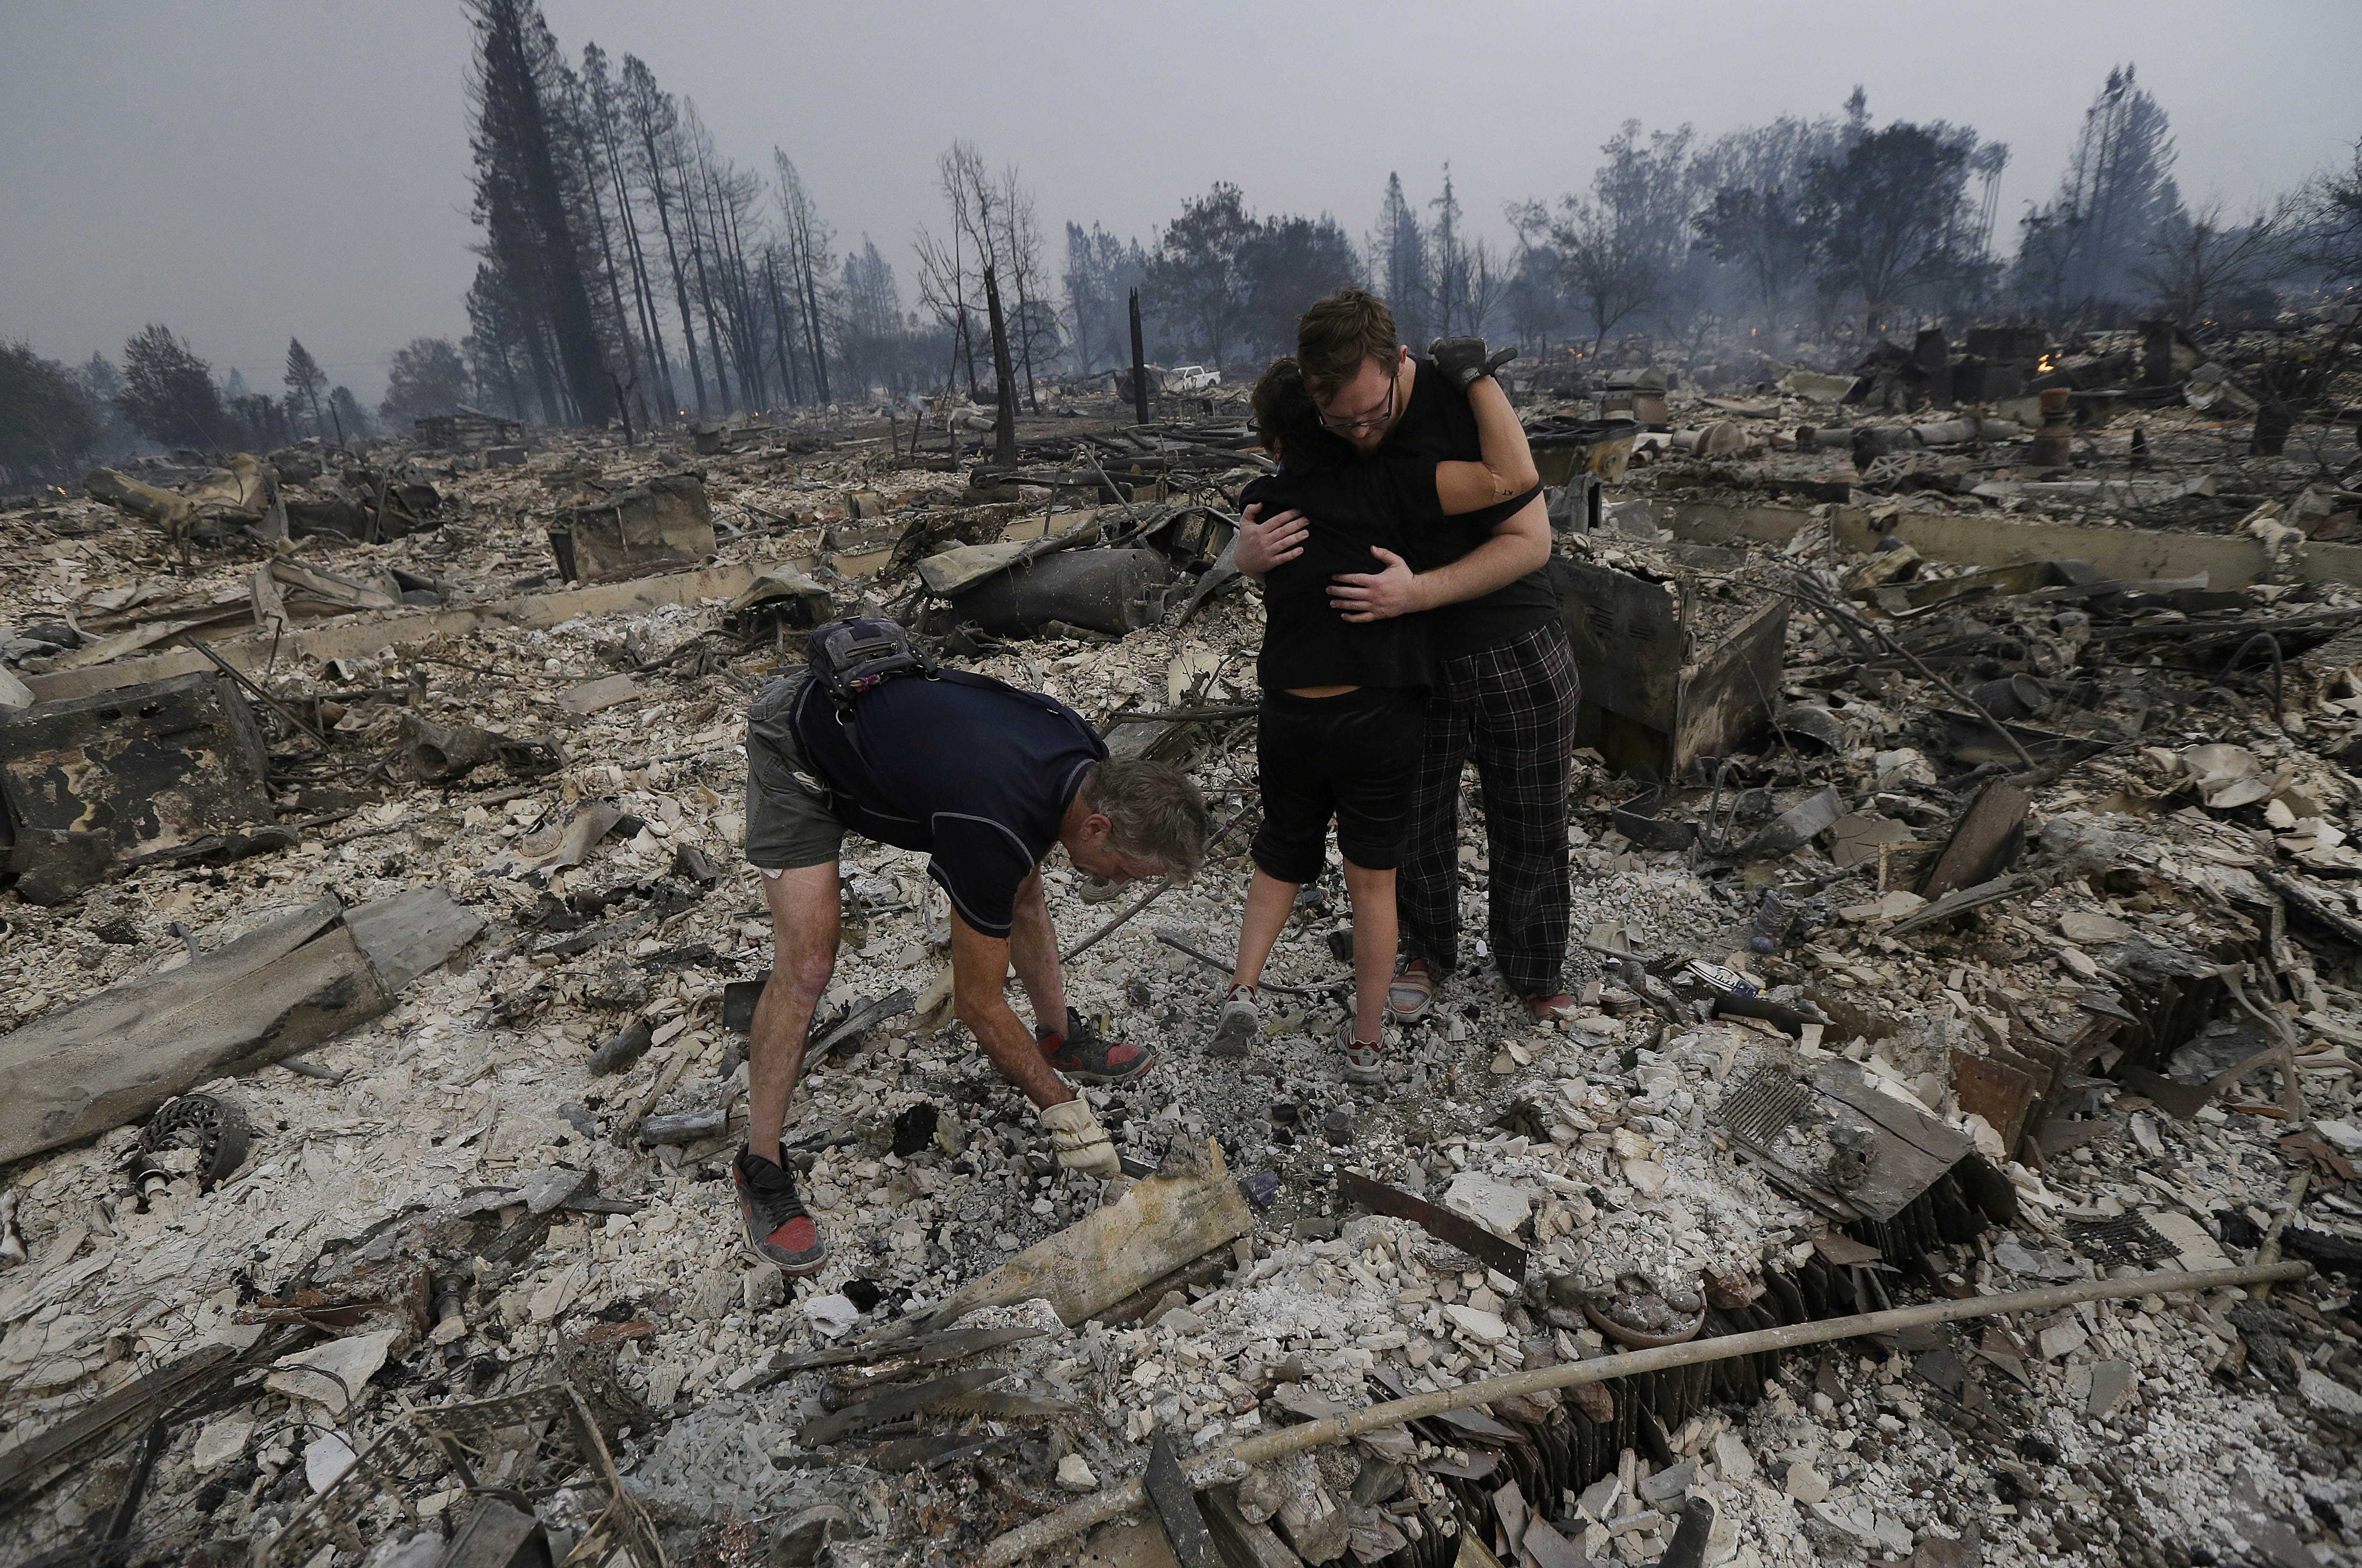 PHOTOS: Deadly wildfires rage in California